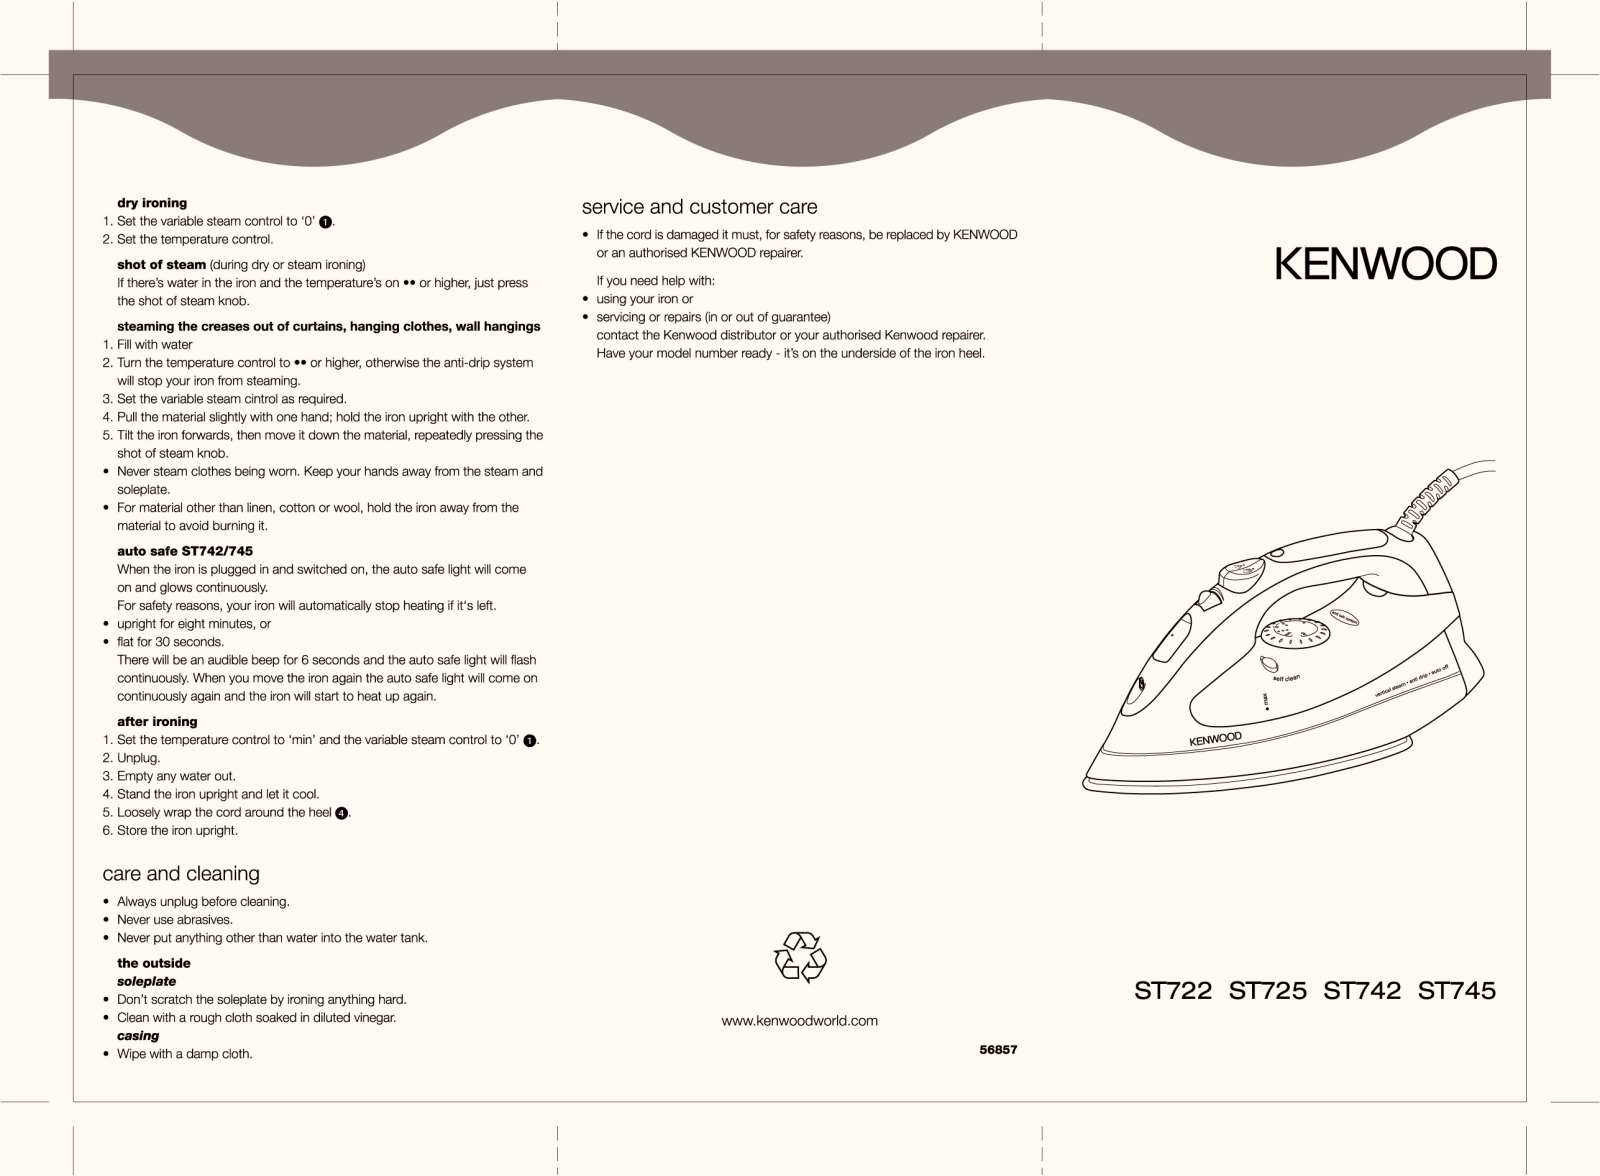 Kenwood ST722, ST725, ST742, ST745 User Manual